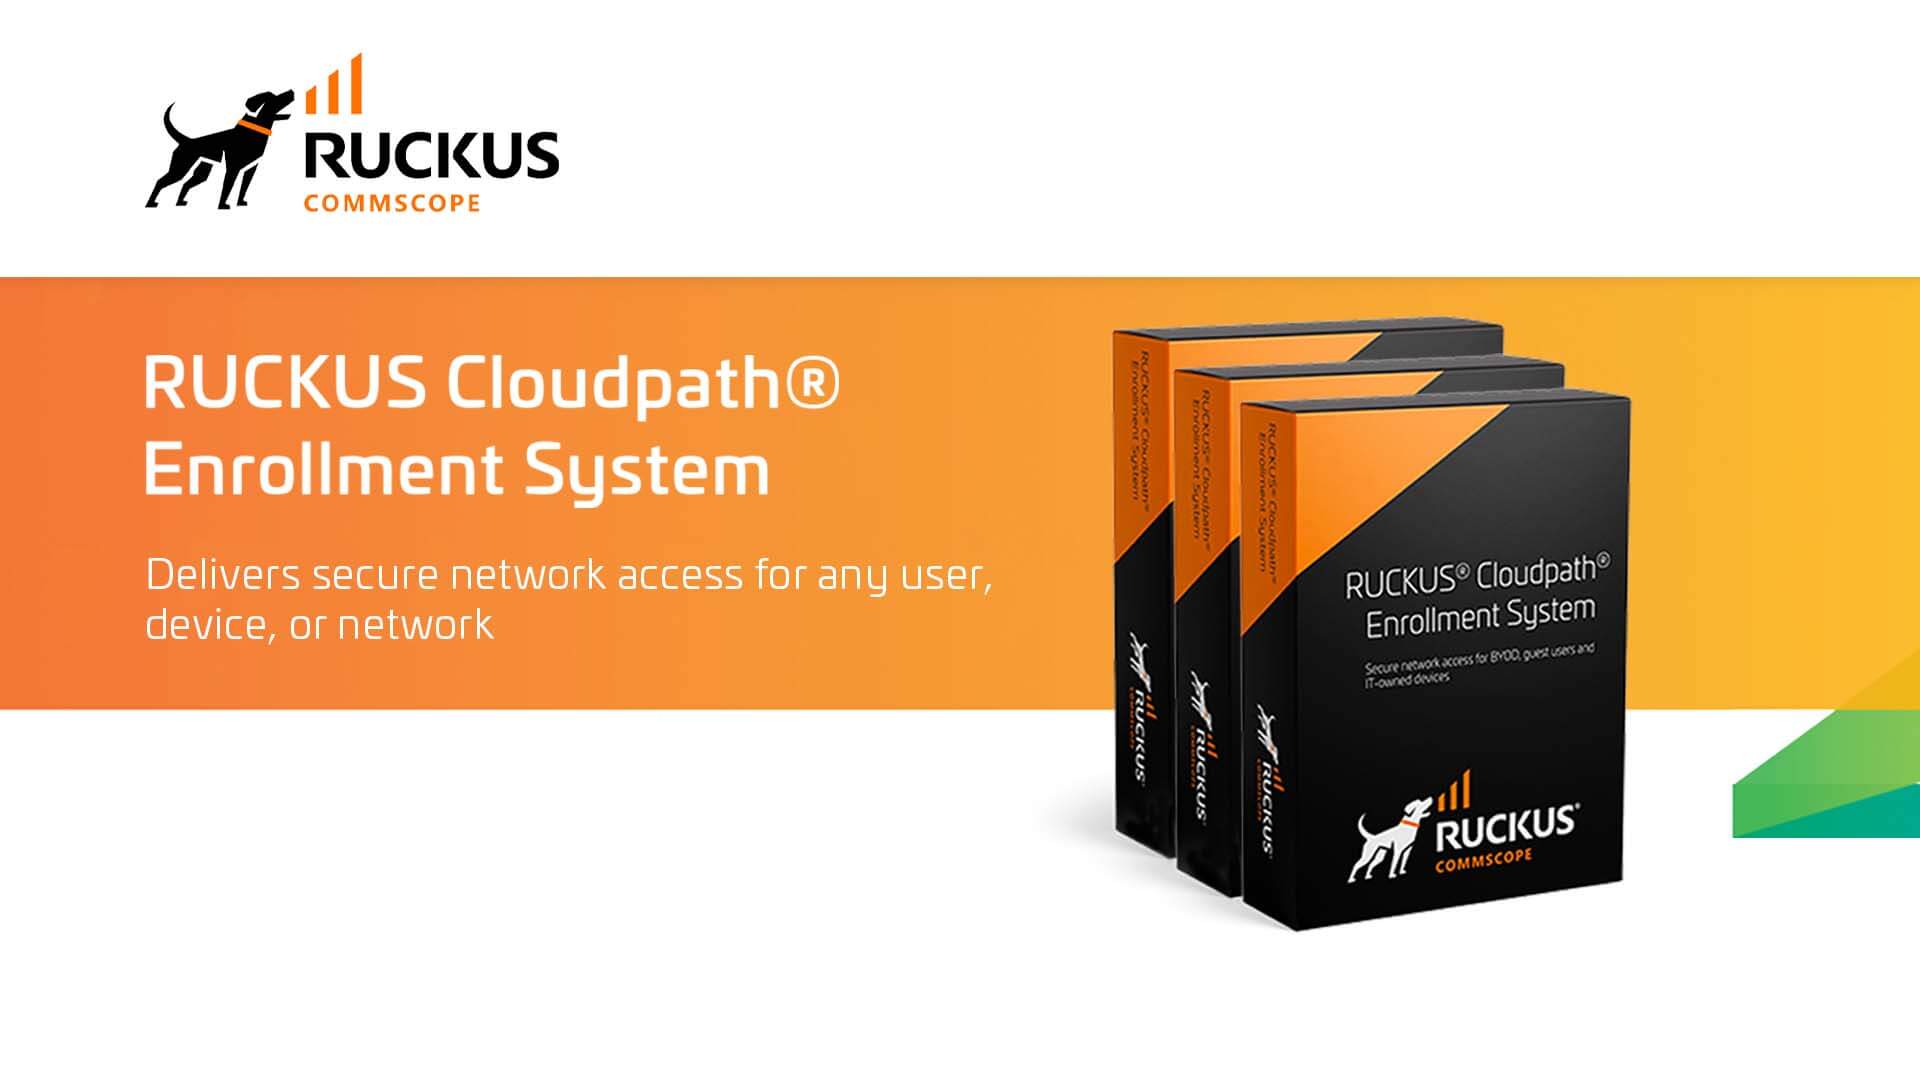 Ruckus Cloudpath® Enrollment System